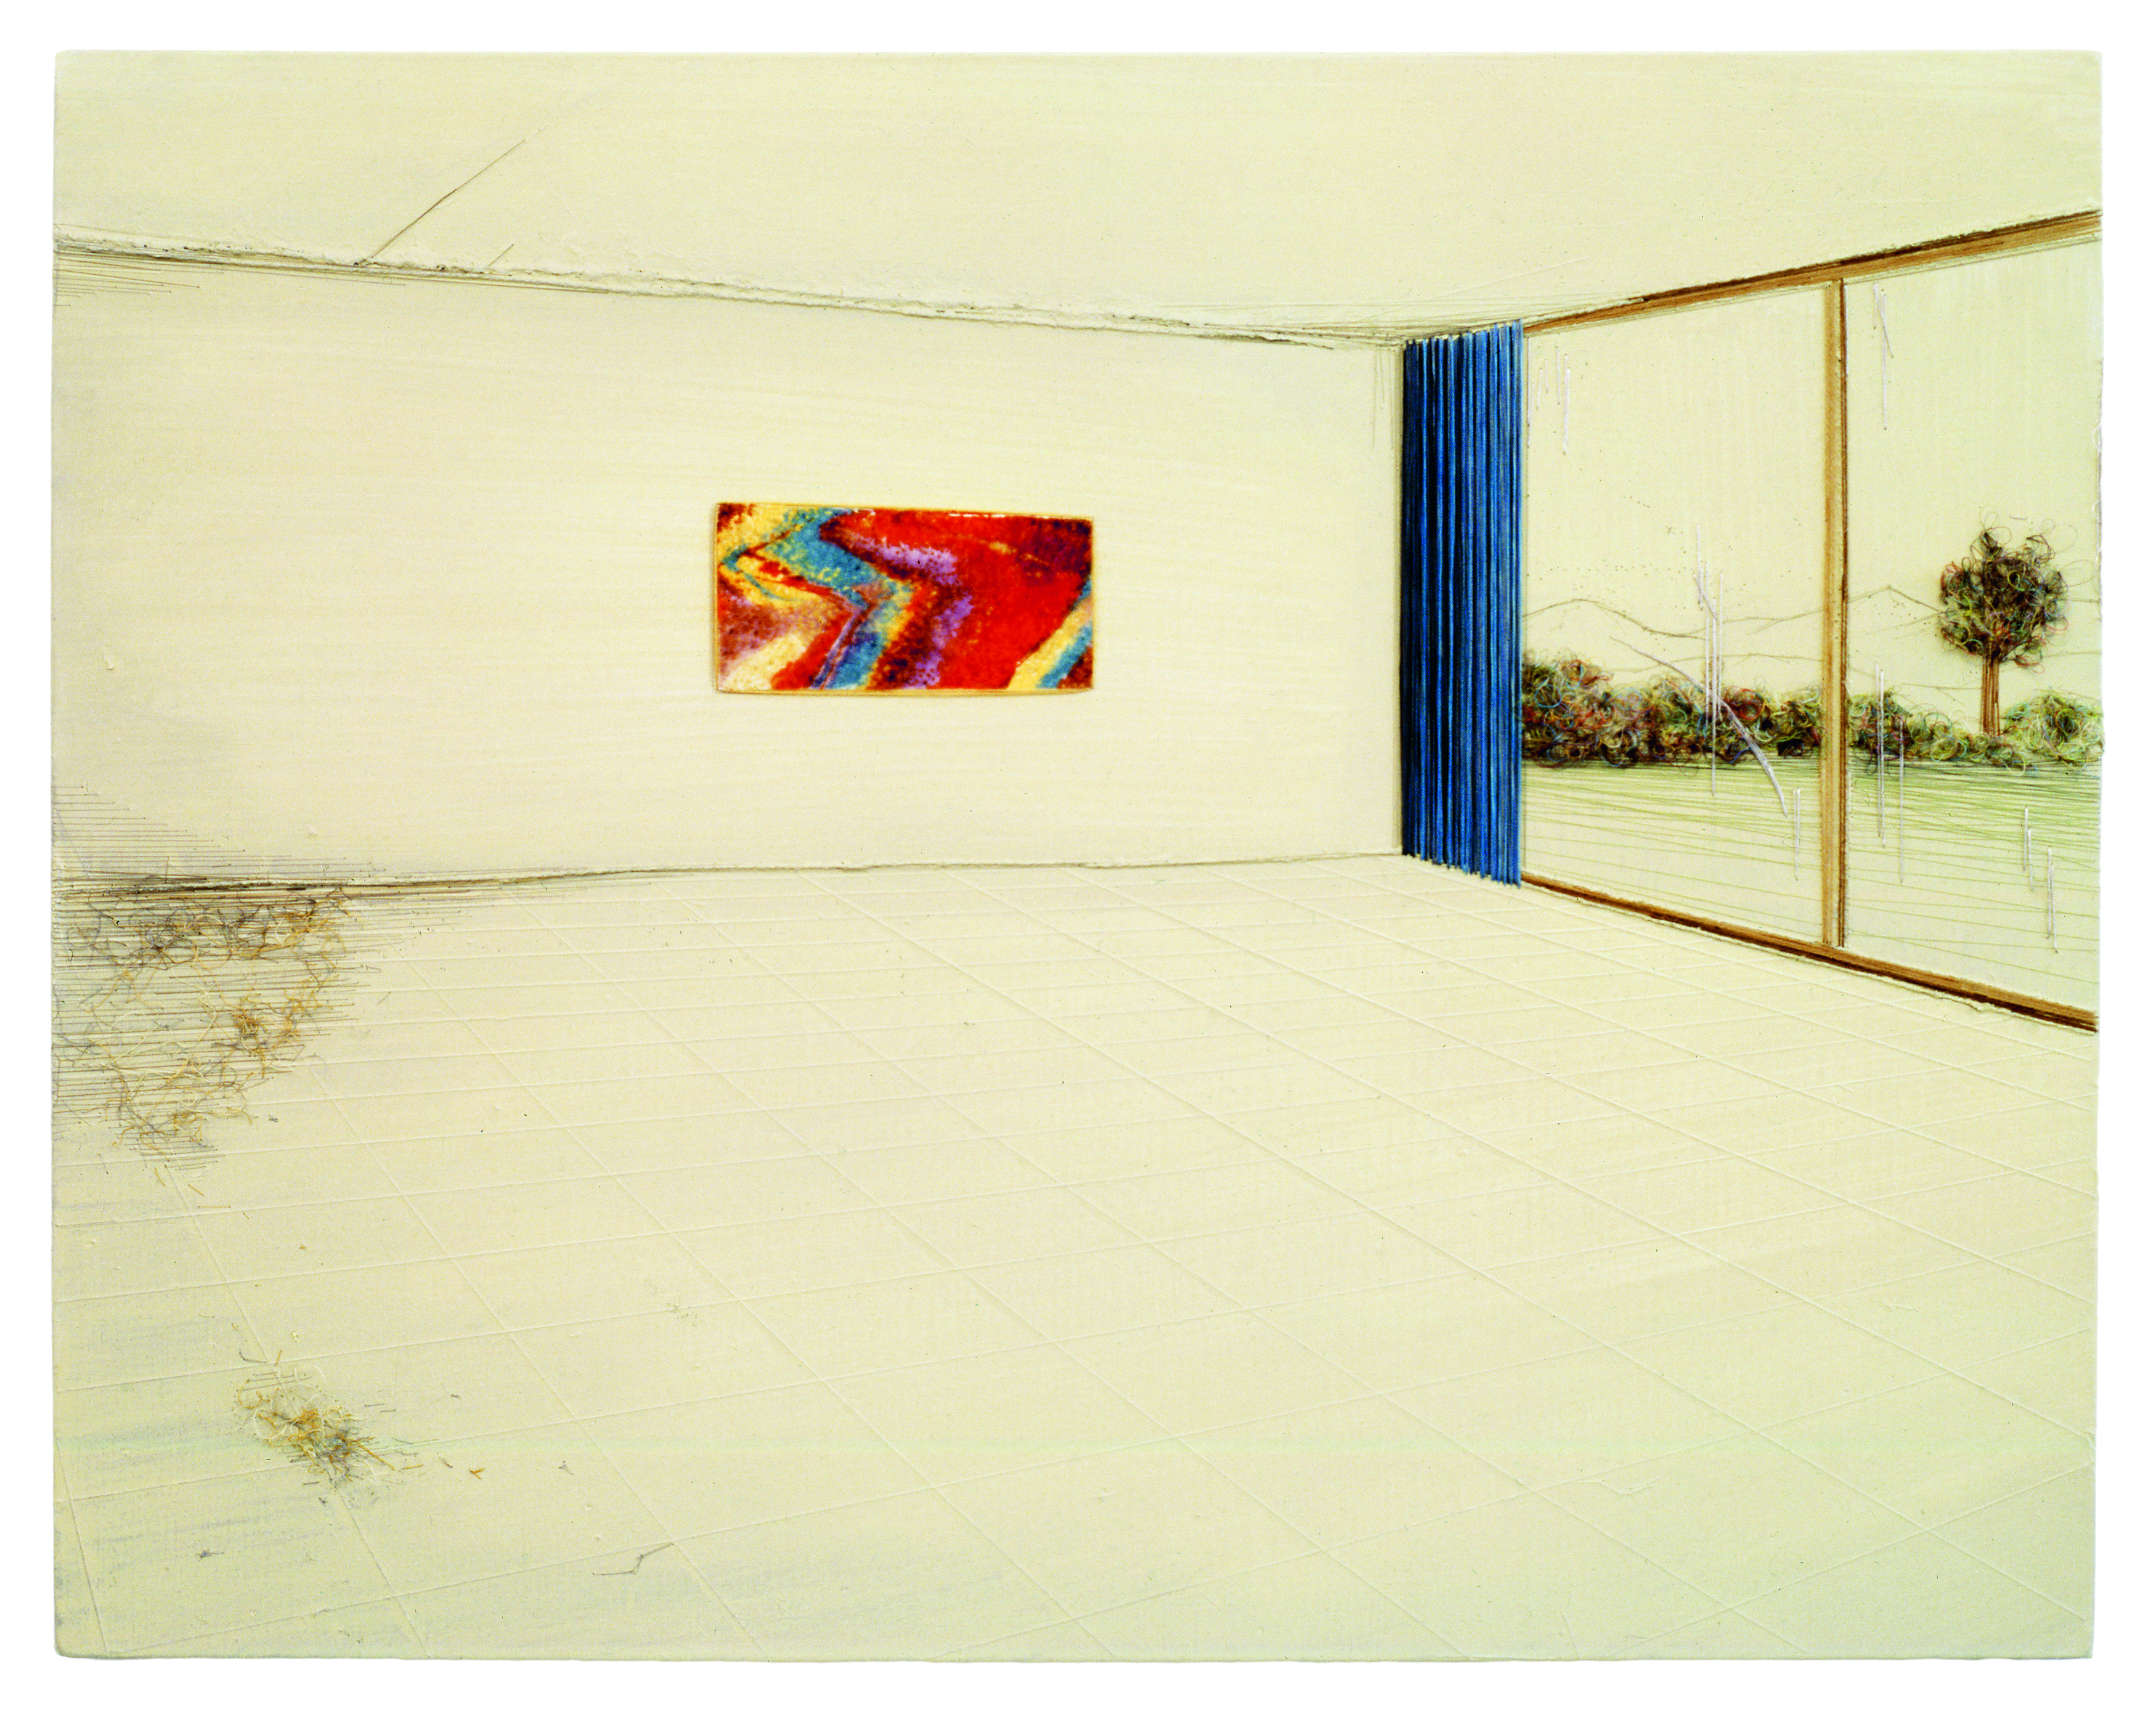 Michael Raedecker, abstract, 1998. Acrylic, fabric and thread on canvas, 66 x 84